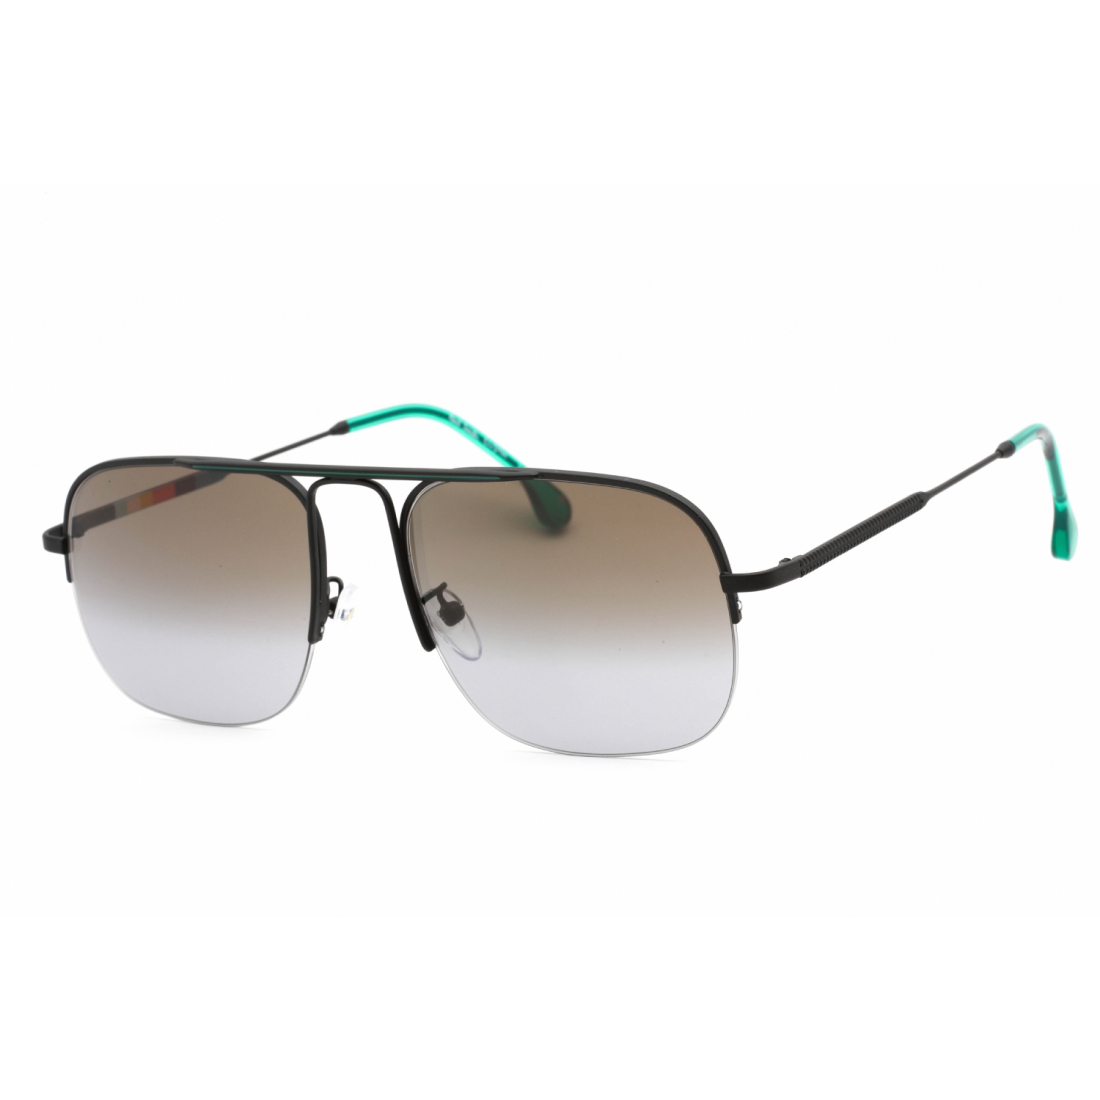 Men's 'PSSN02558 CLIFTON' Sunglasses